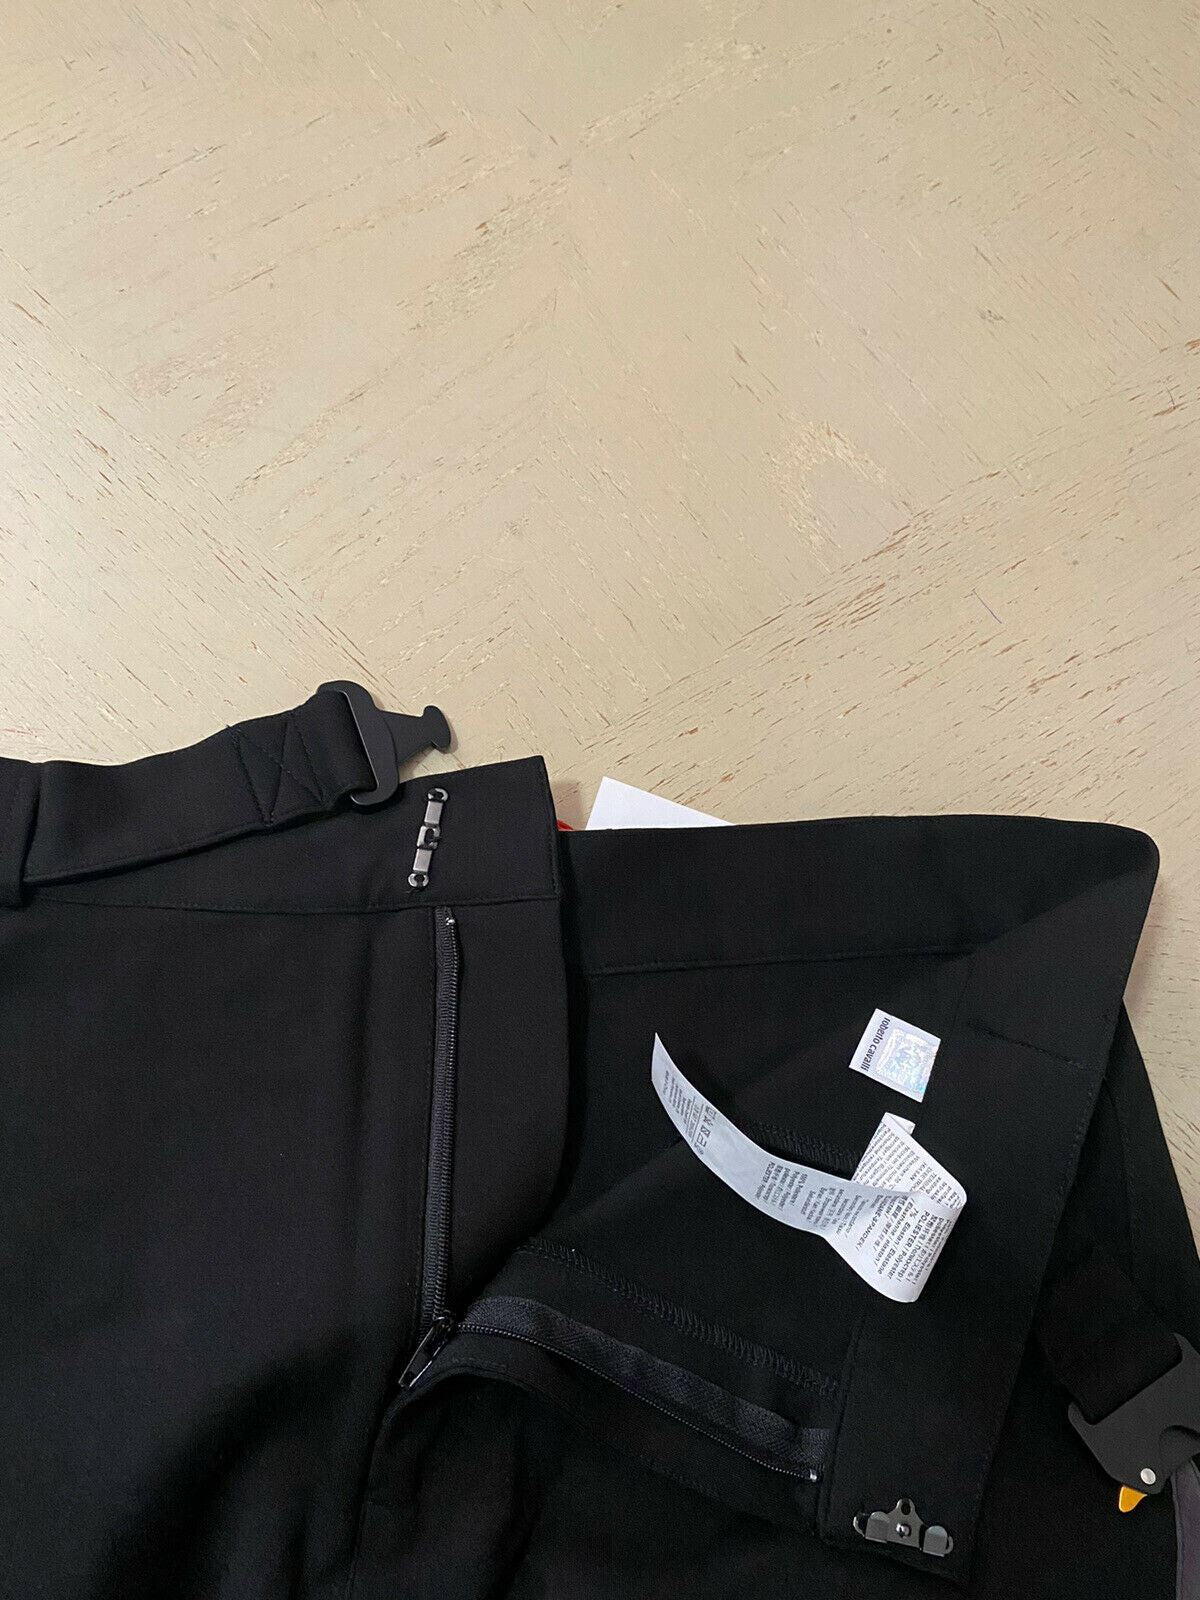 NWT $415 Мужские шорты для плавания Roberto Cavalli, черные, размер S